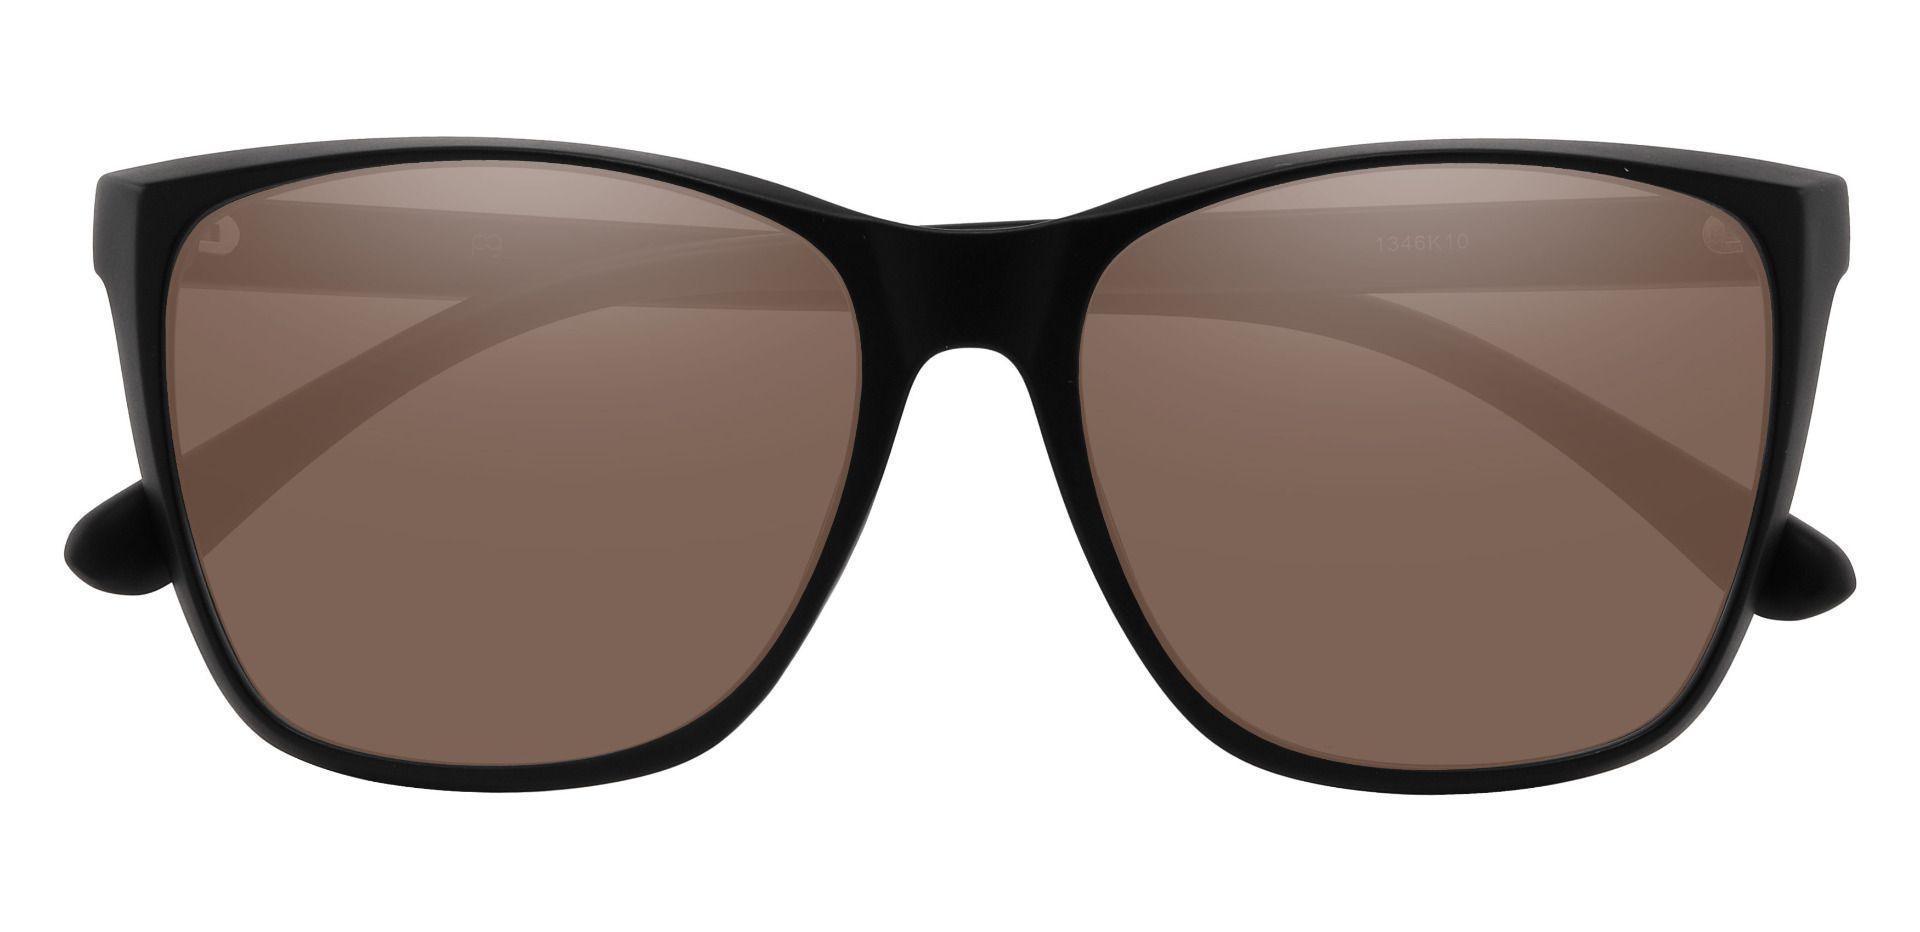 Taryn Square Prescription Sunglasses - Black Frame With Brown Lenses